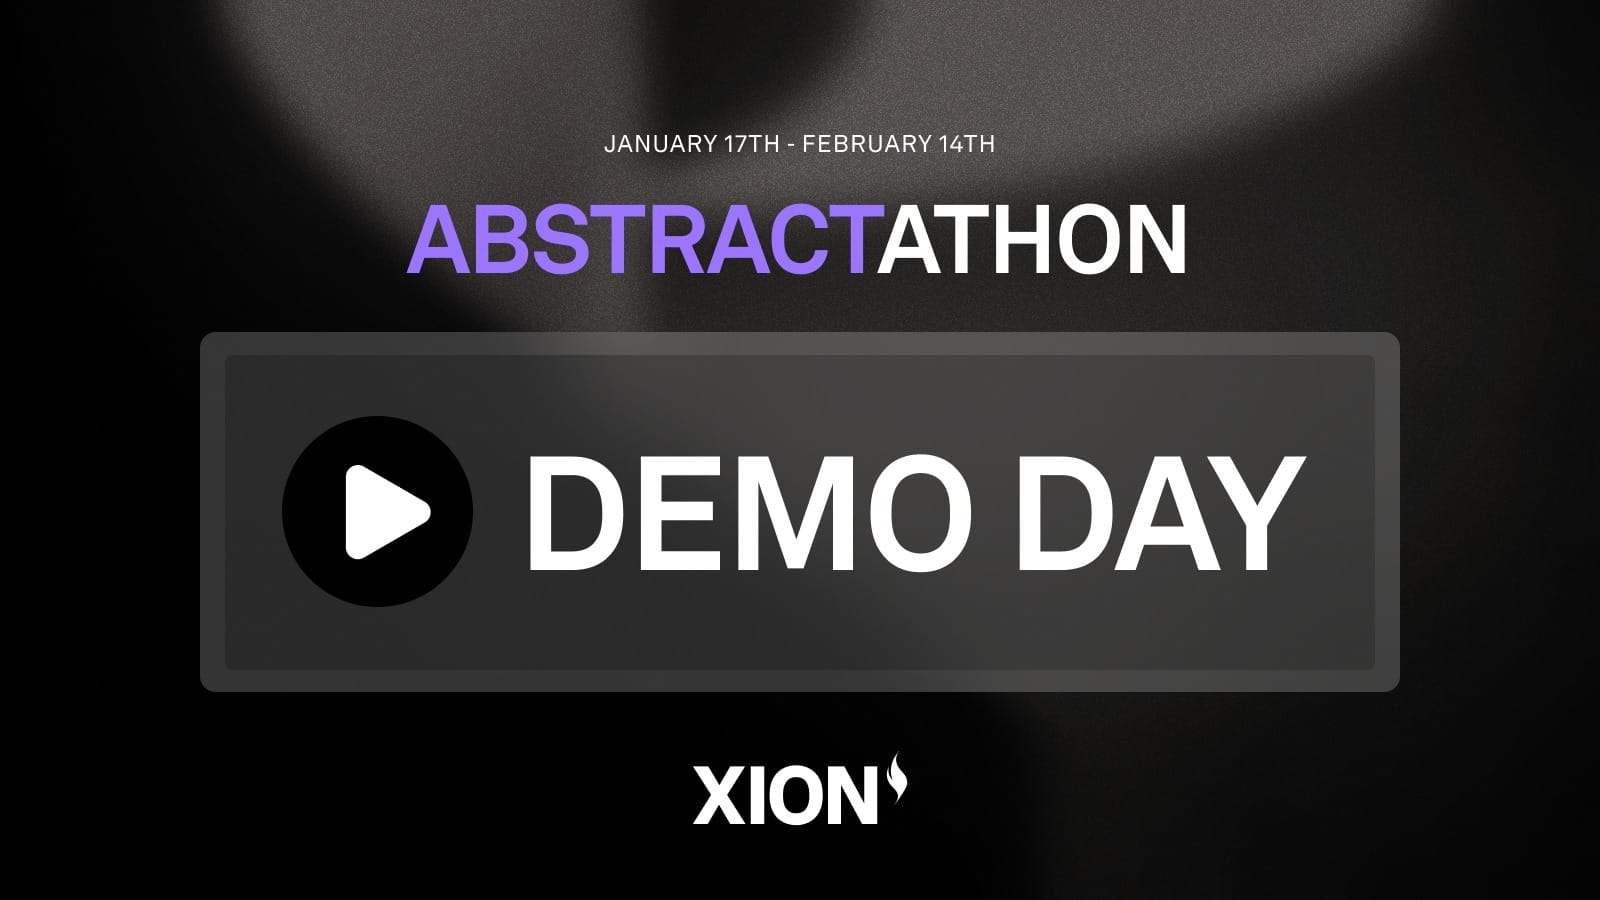  XION ABSTRACTATHON Demo Day